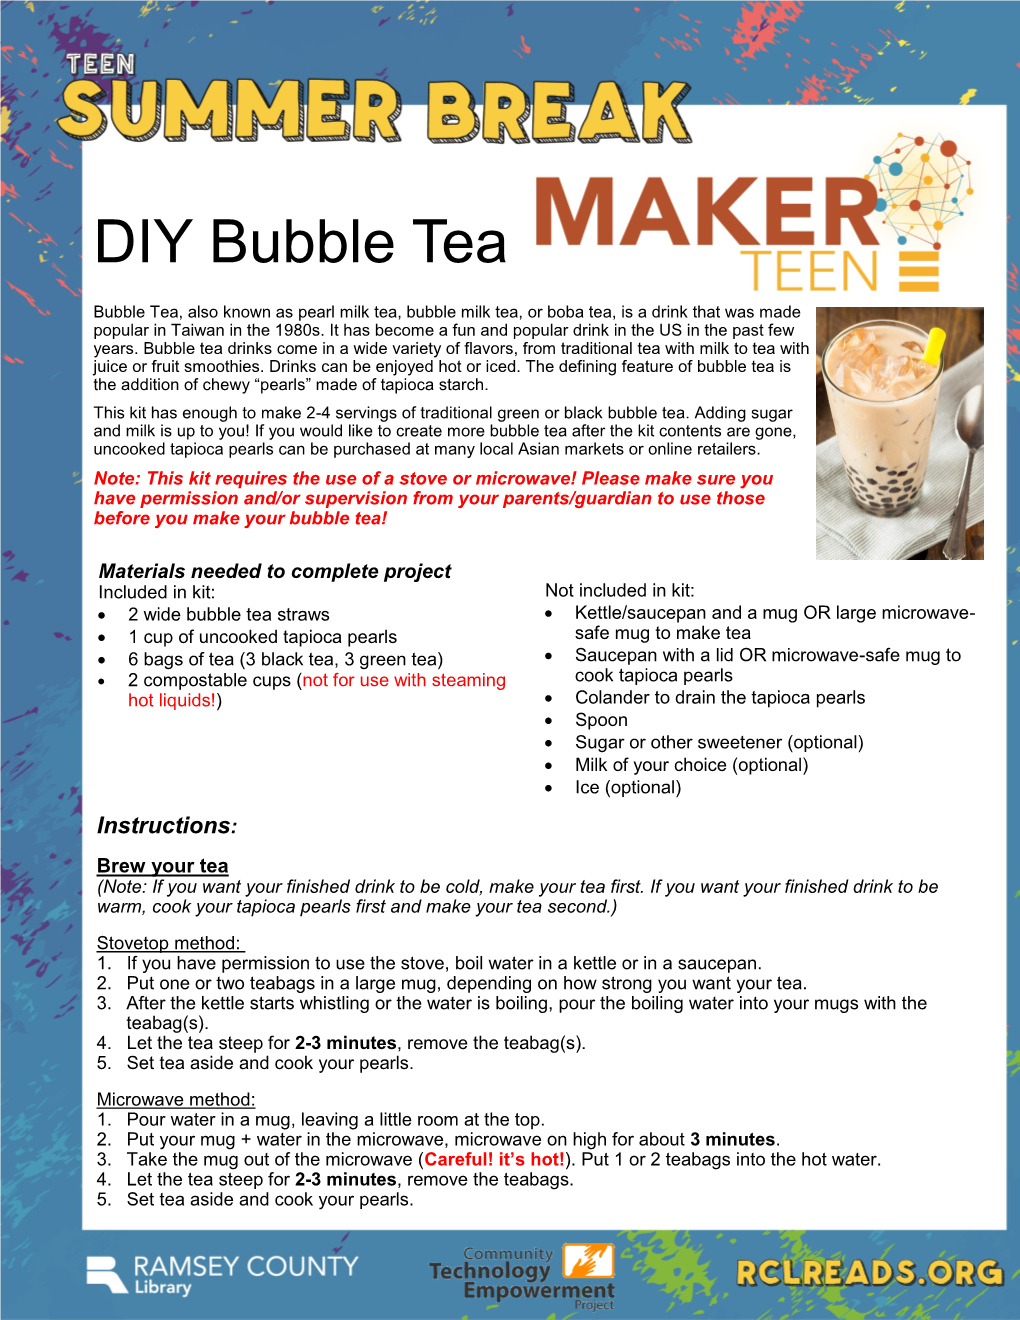 DIY Bubble Tea